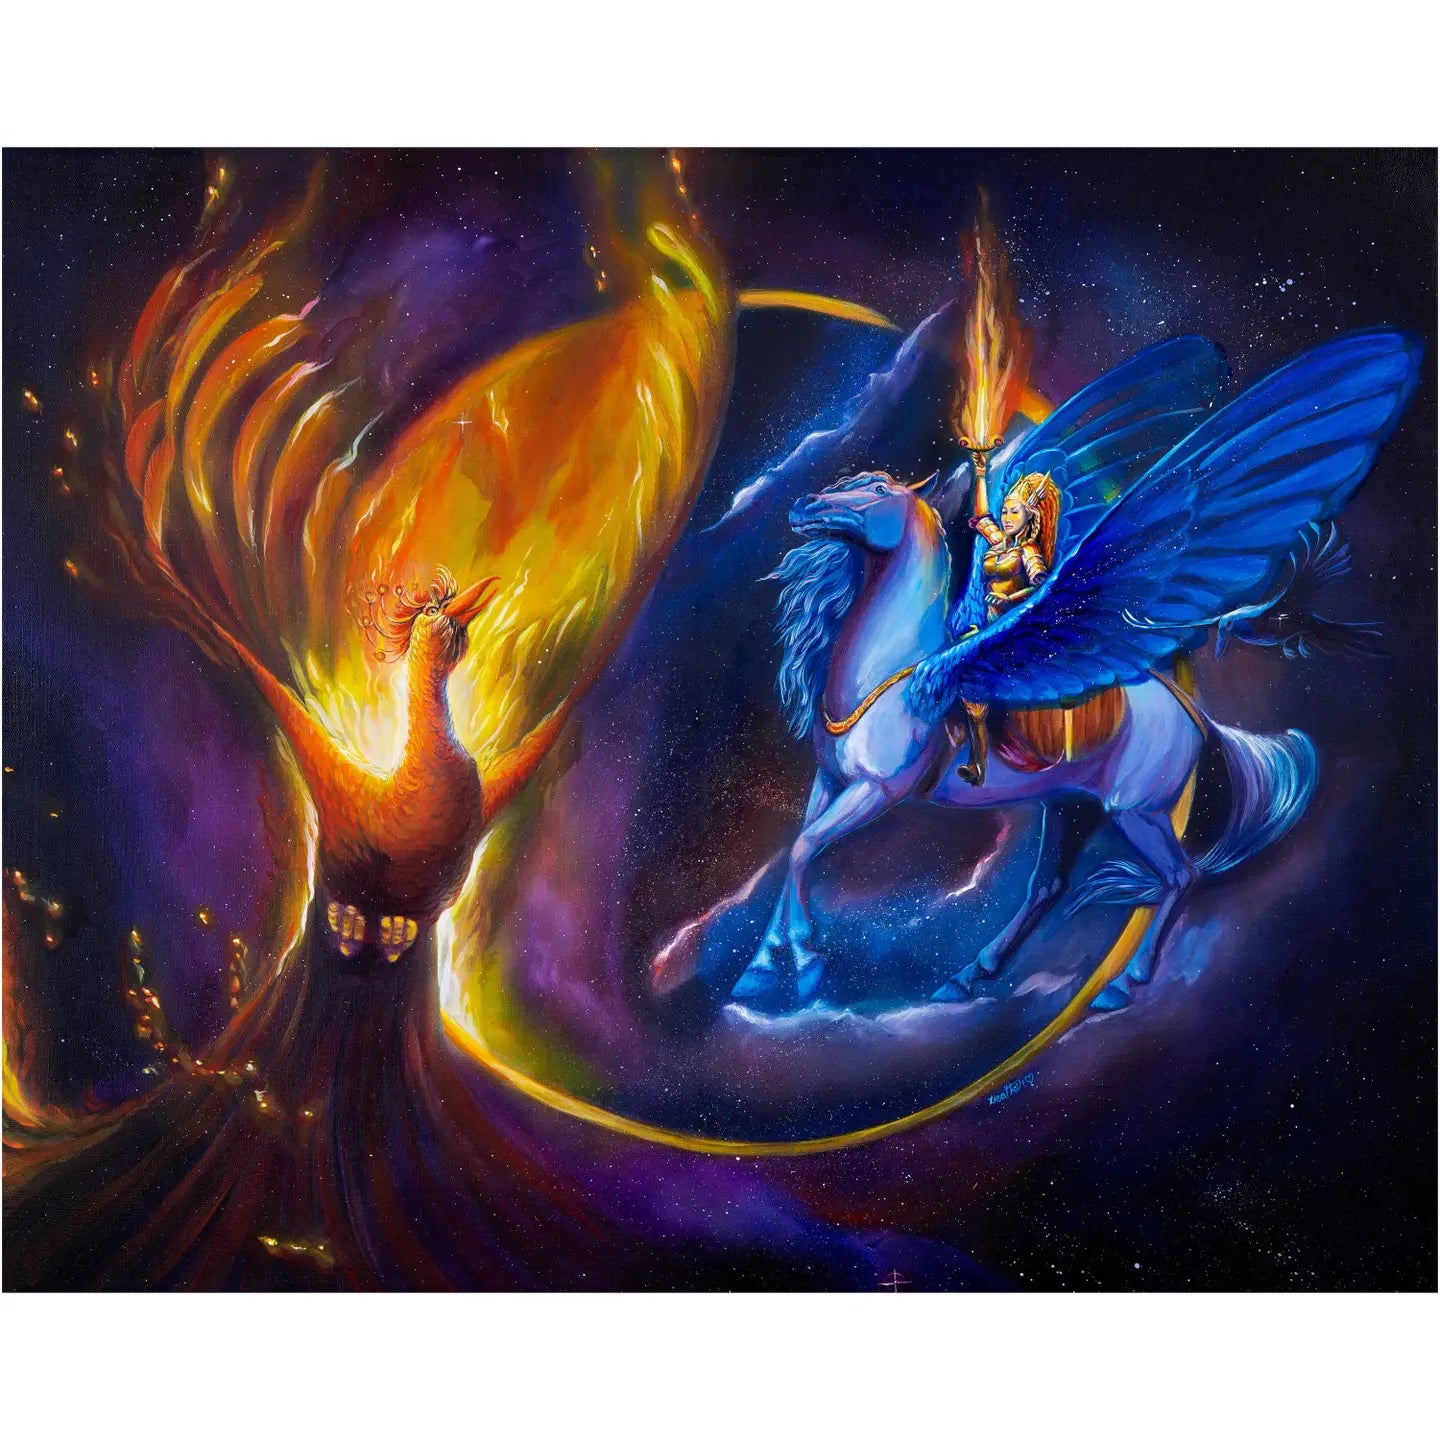 Valkyrie & the Phoenix Fantasy Art Print